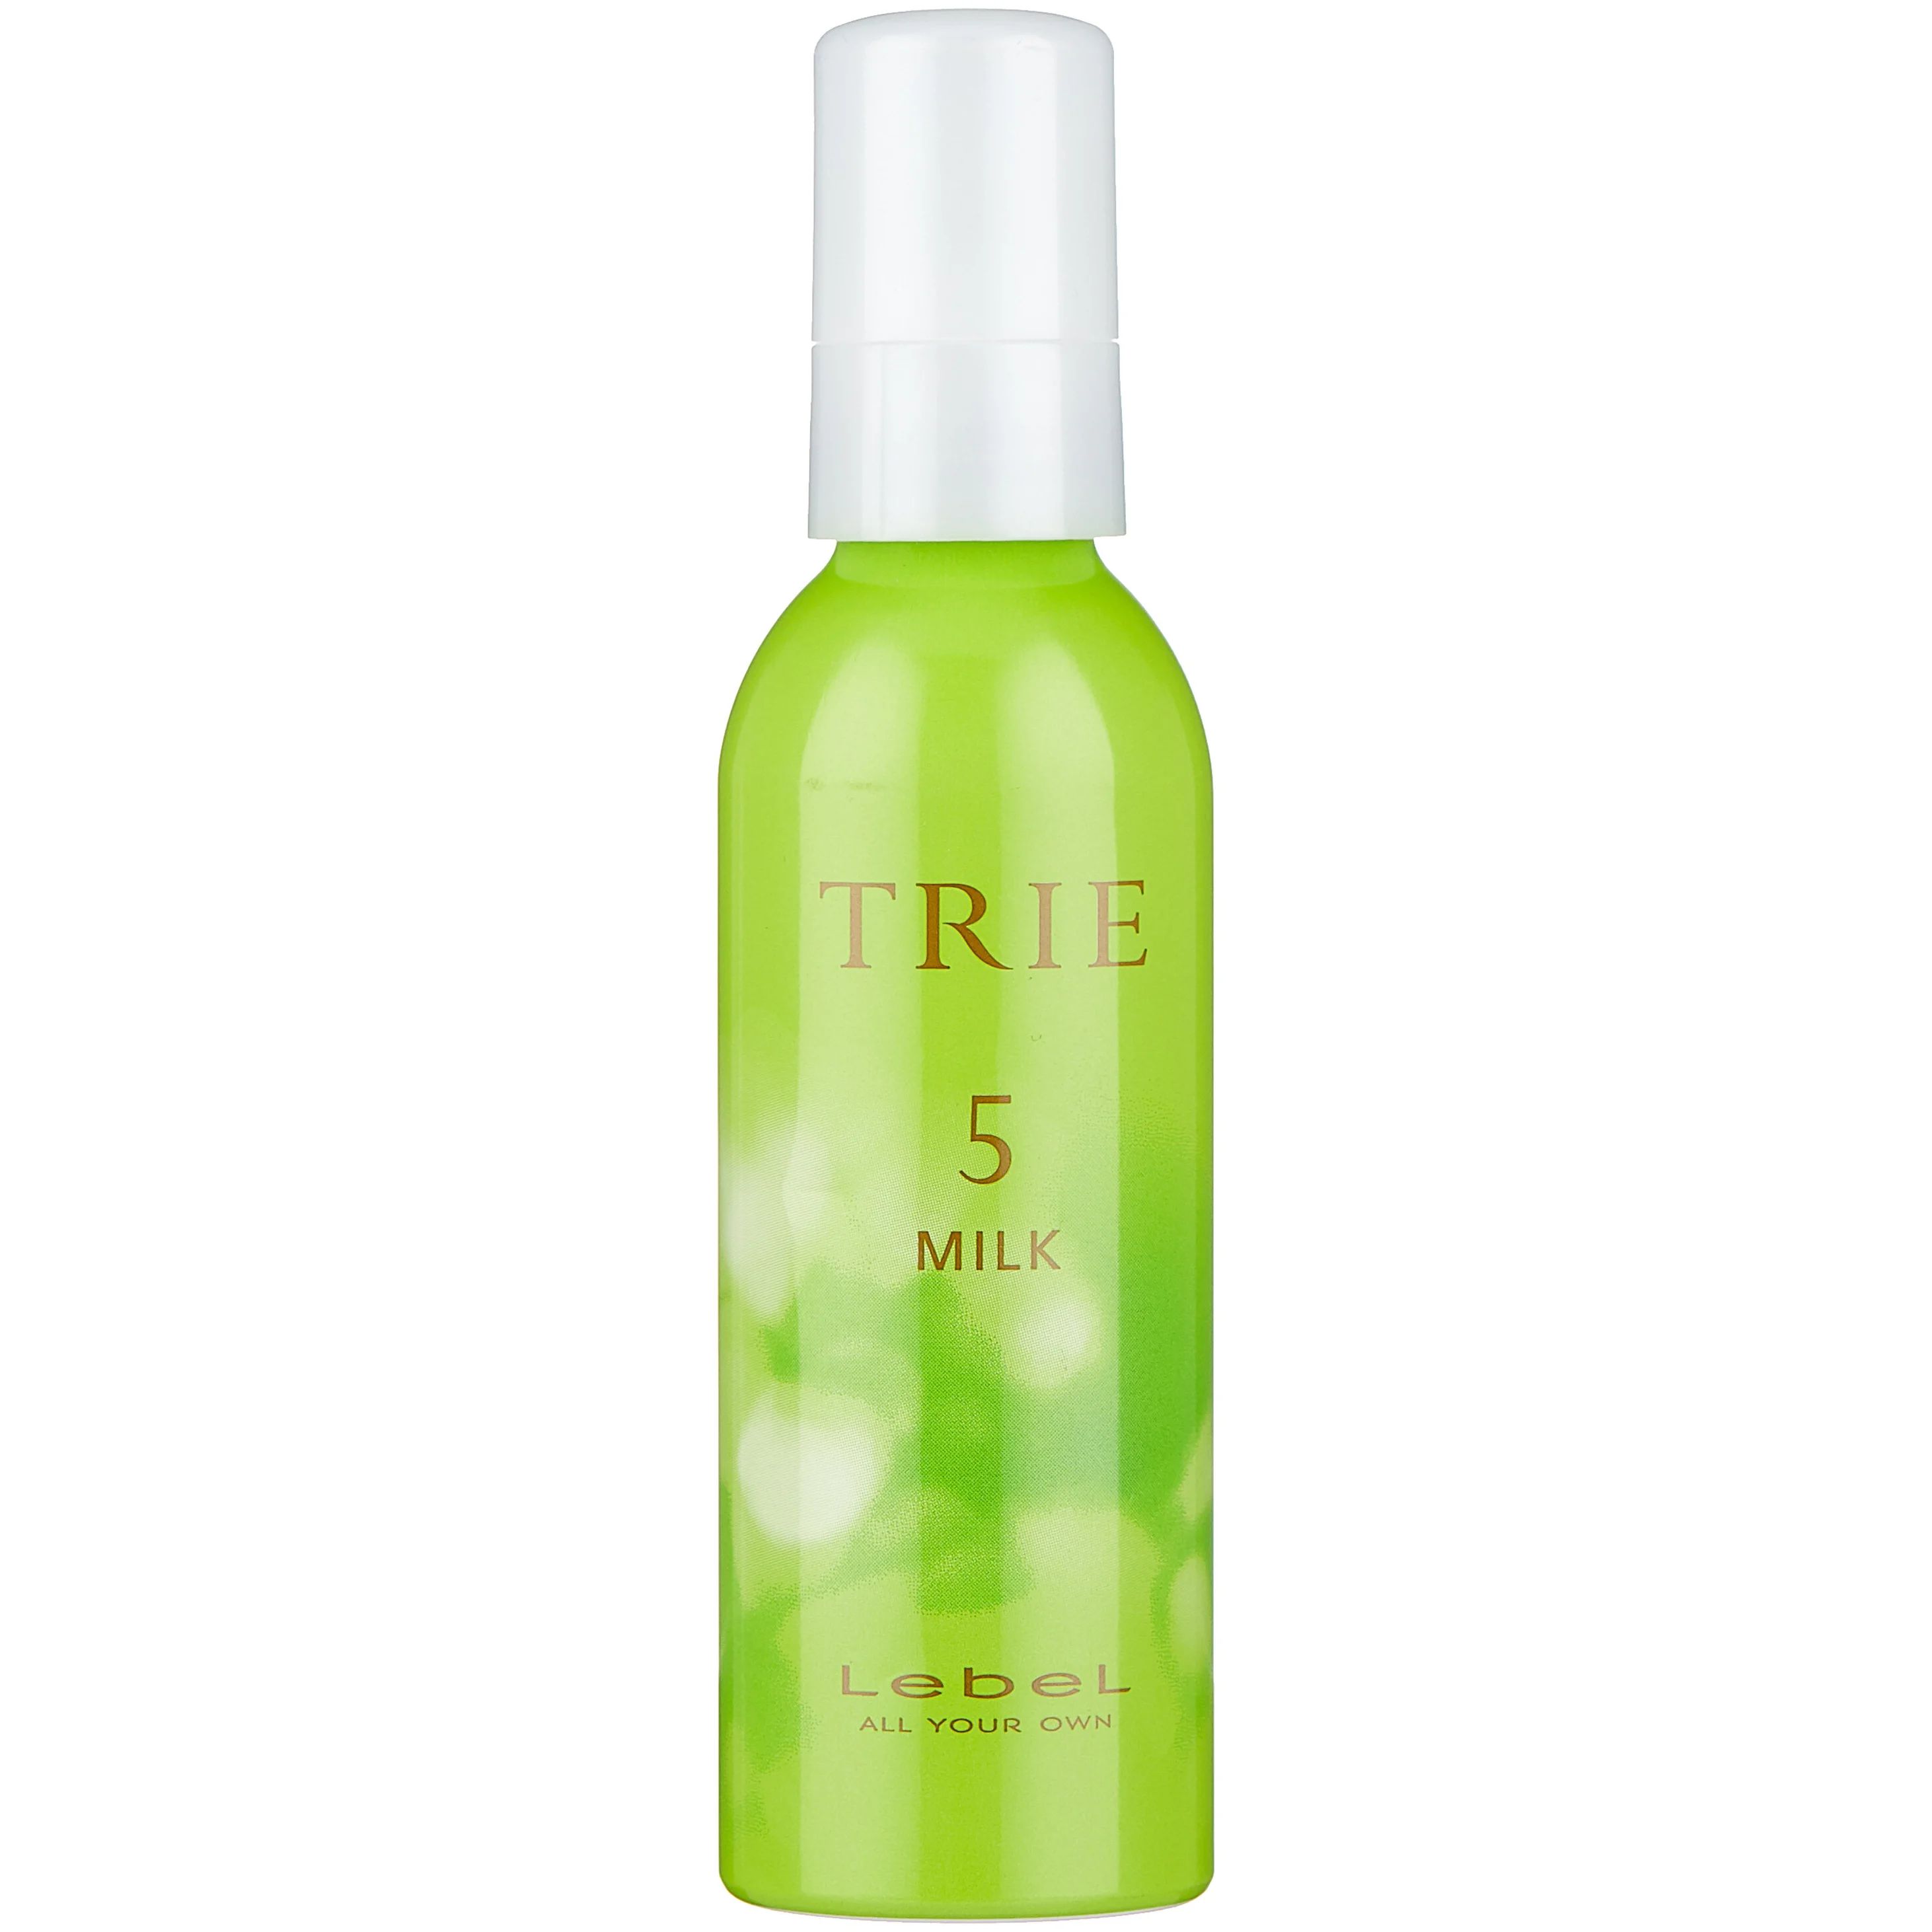 Молочко для укладки волос средней фиксации Lebel Cosmetics Trie Milk 5, 140 мл lebel разглаживающий крем для укладки волос trie tuner cream 0 95